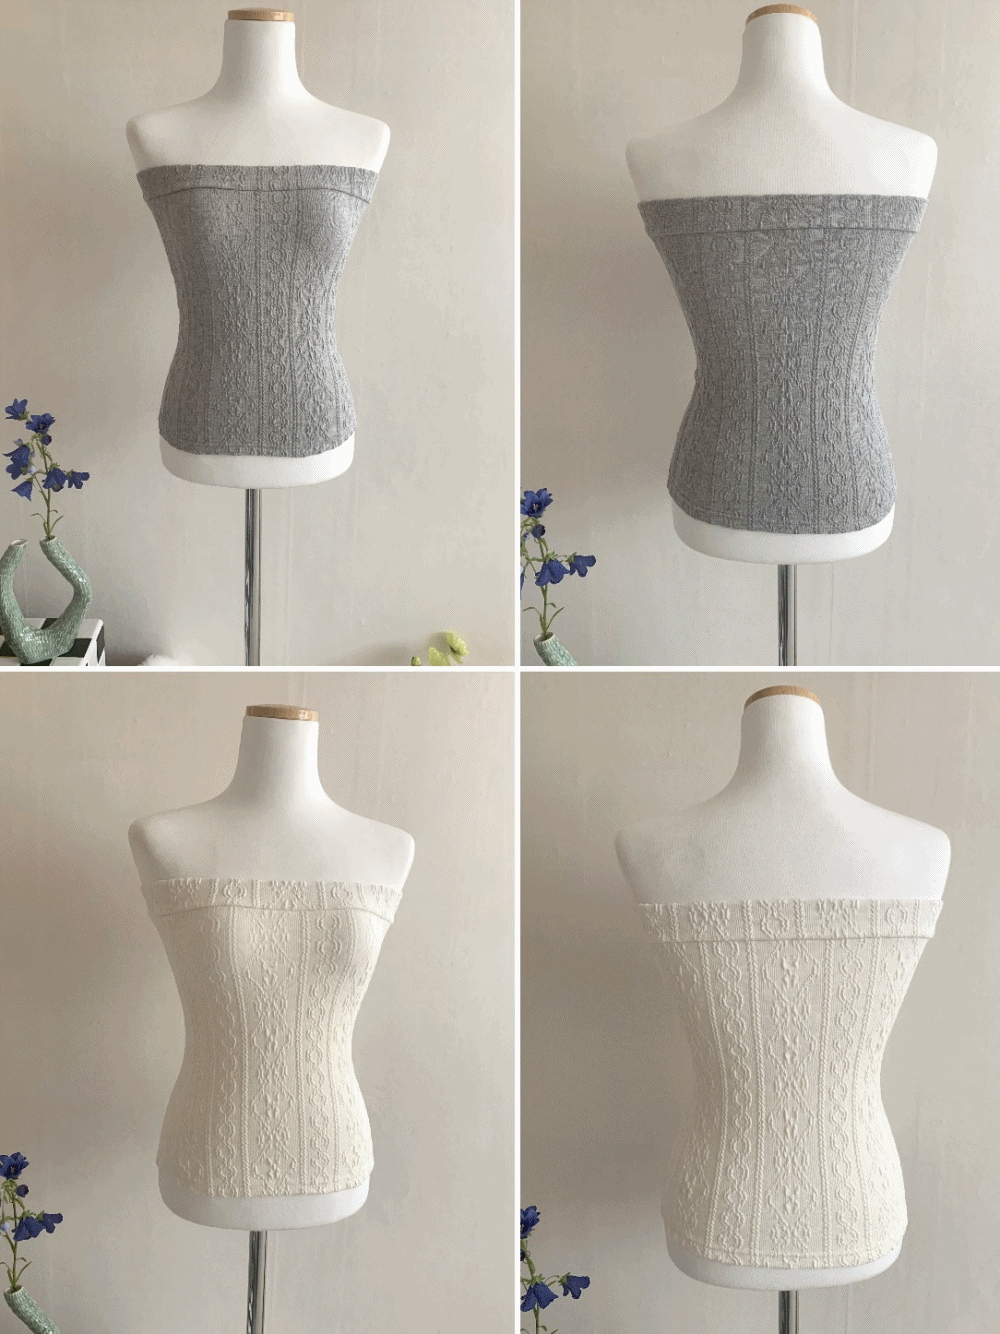 [Top/ Innerwear] Jacquard knit top / 3 colors